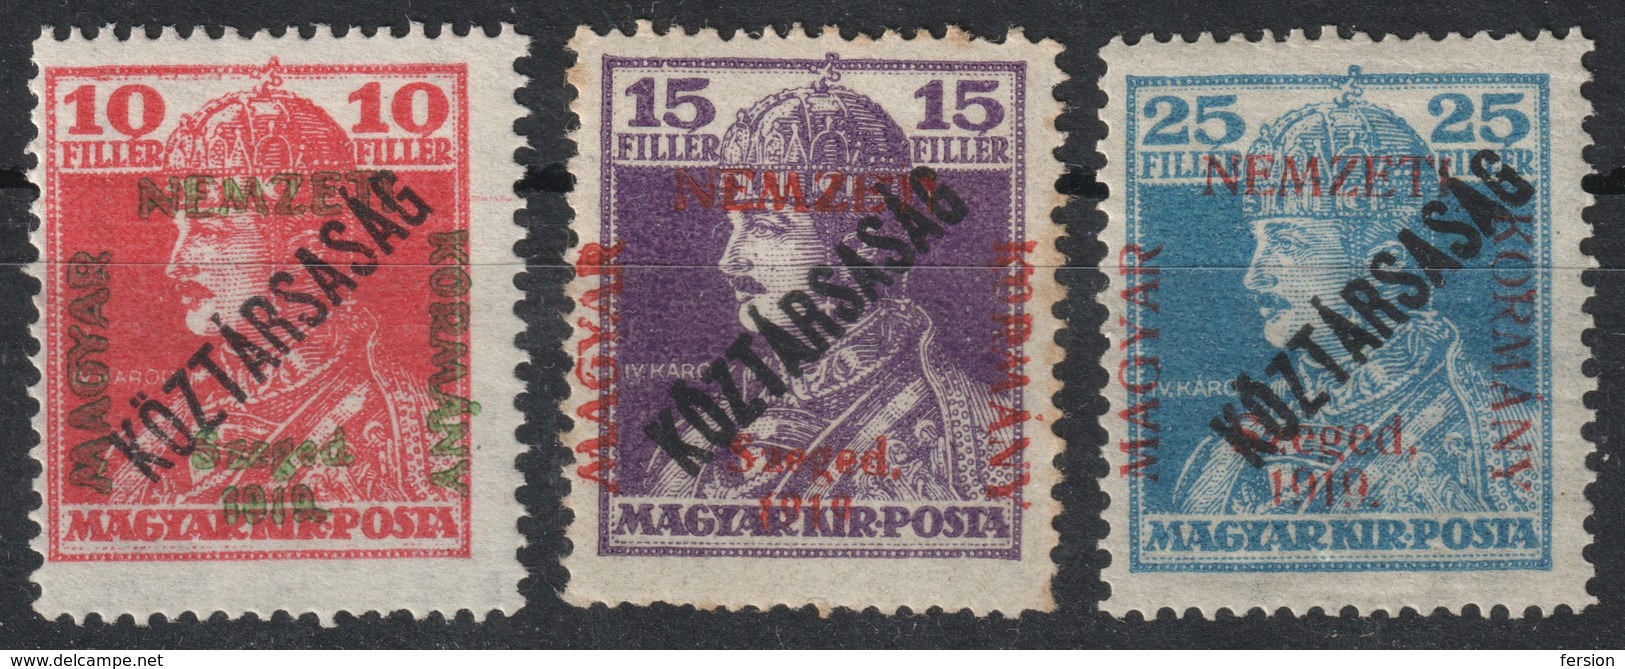 1919 France Occupation Local SZEGED - Hungary - KING Emperor Karl Charles Overprint - MNH LOT - Nuovi